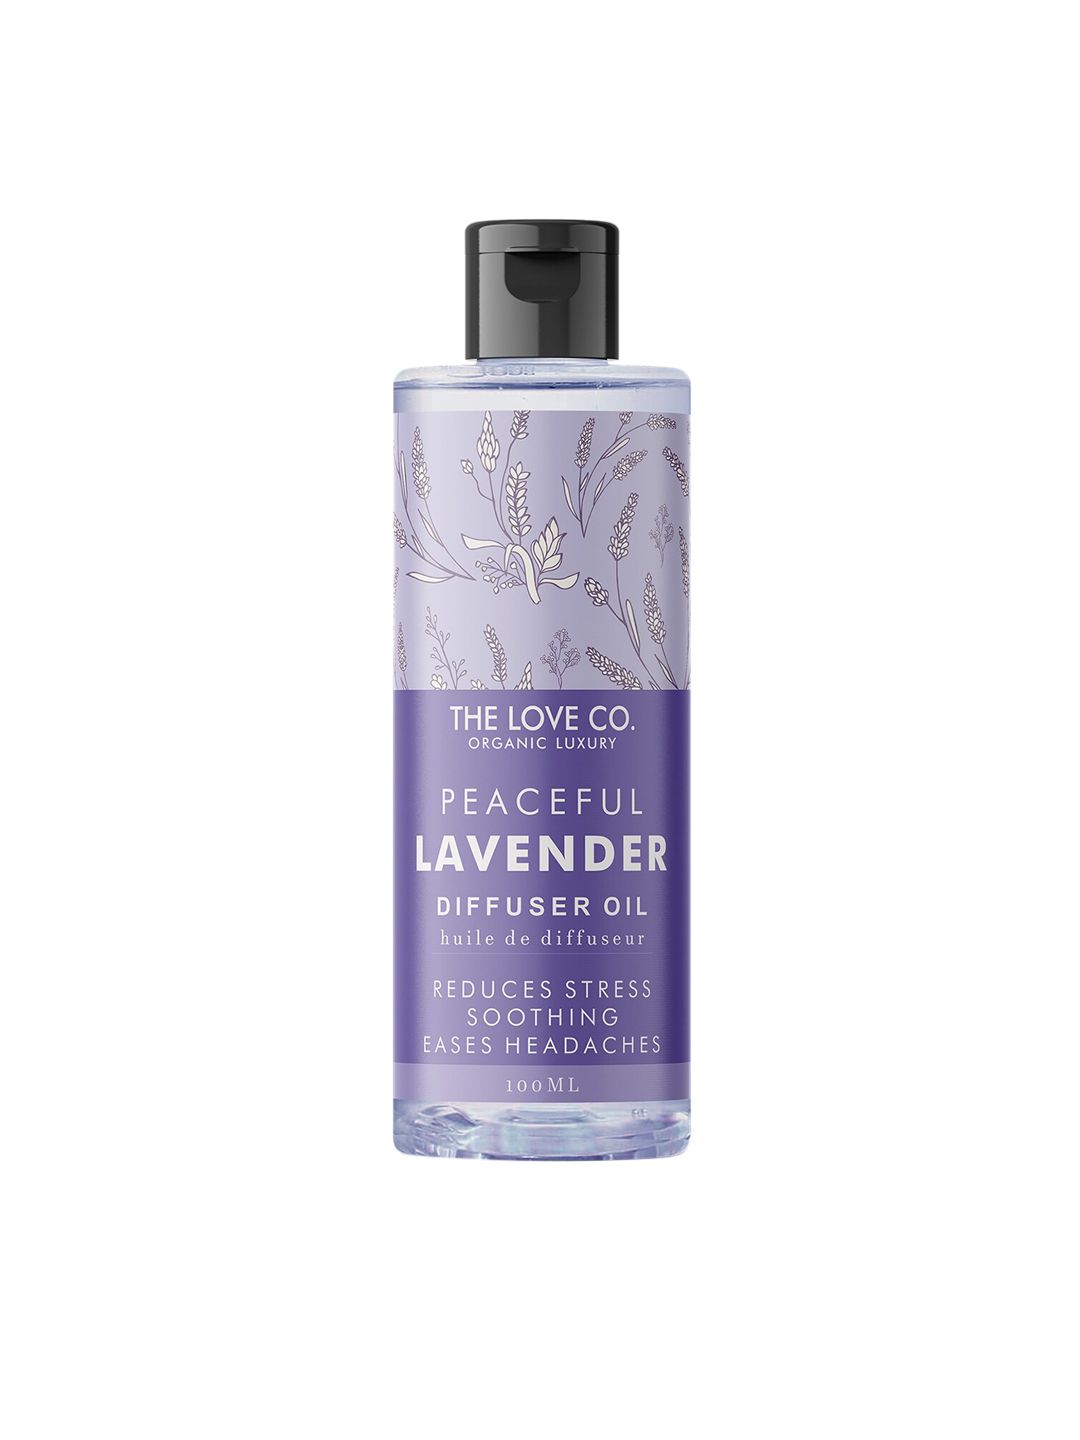 THE LOVE CO. Peaceful Lavender Diffuser Oil - 100 ml Price in India